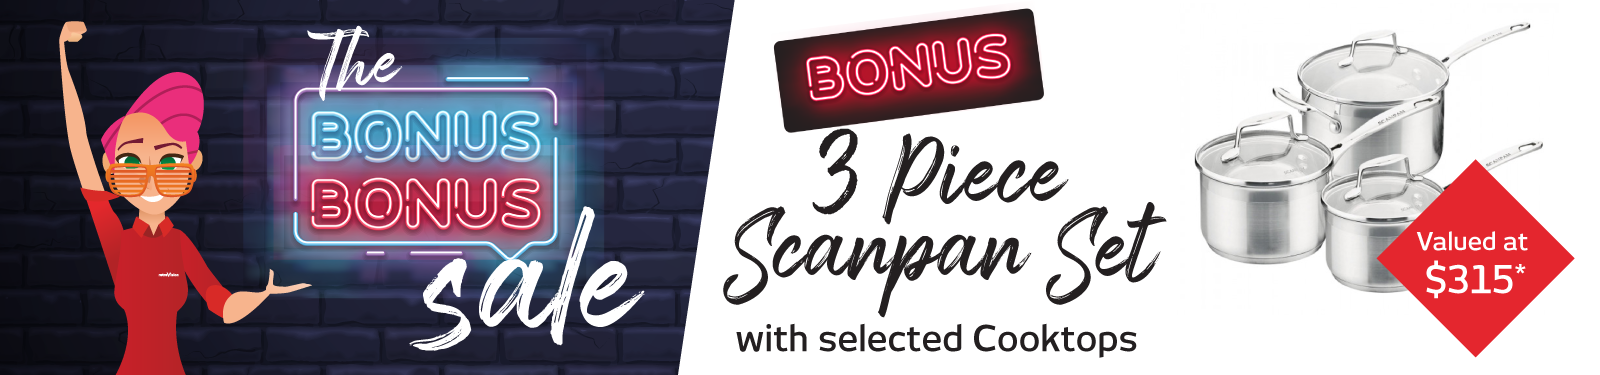 Bonus 3 Piece Scanpan Set at Retravision